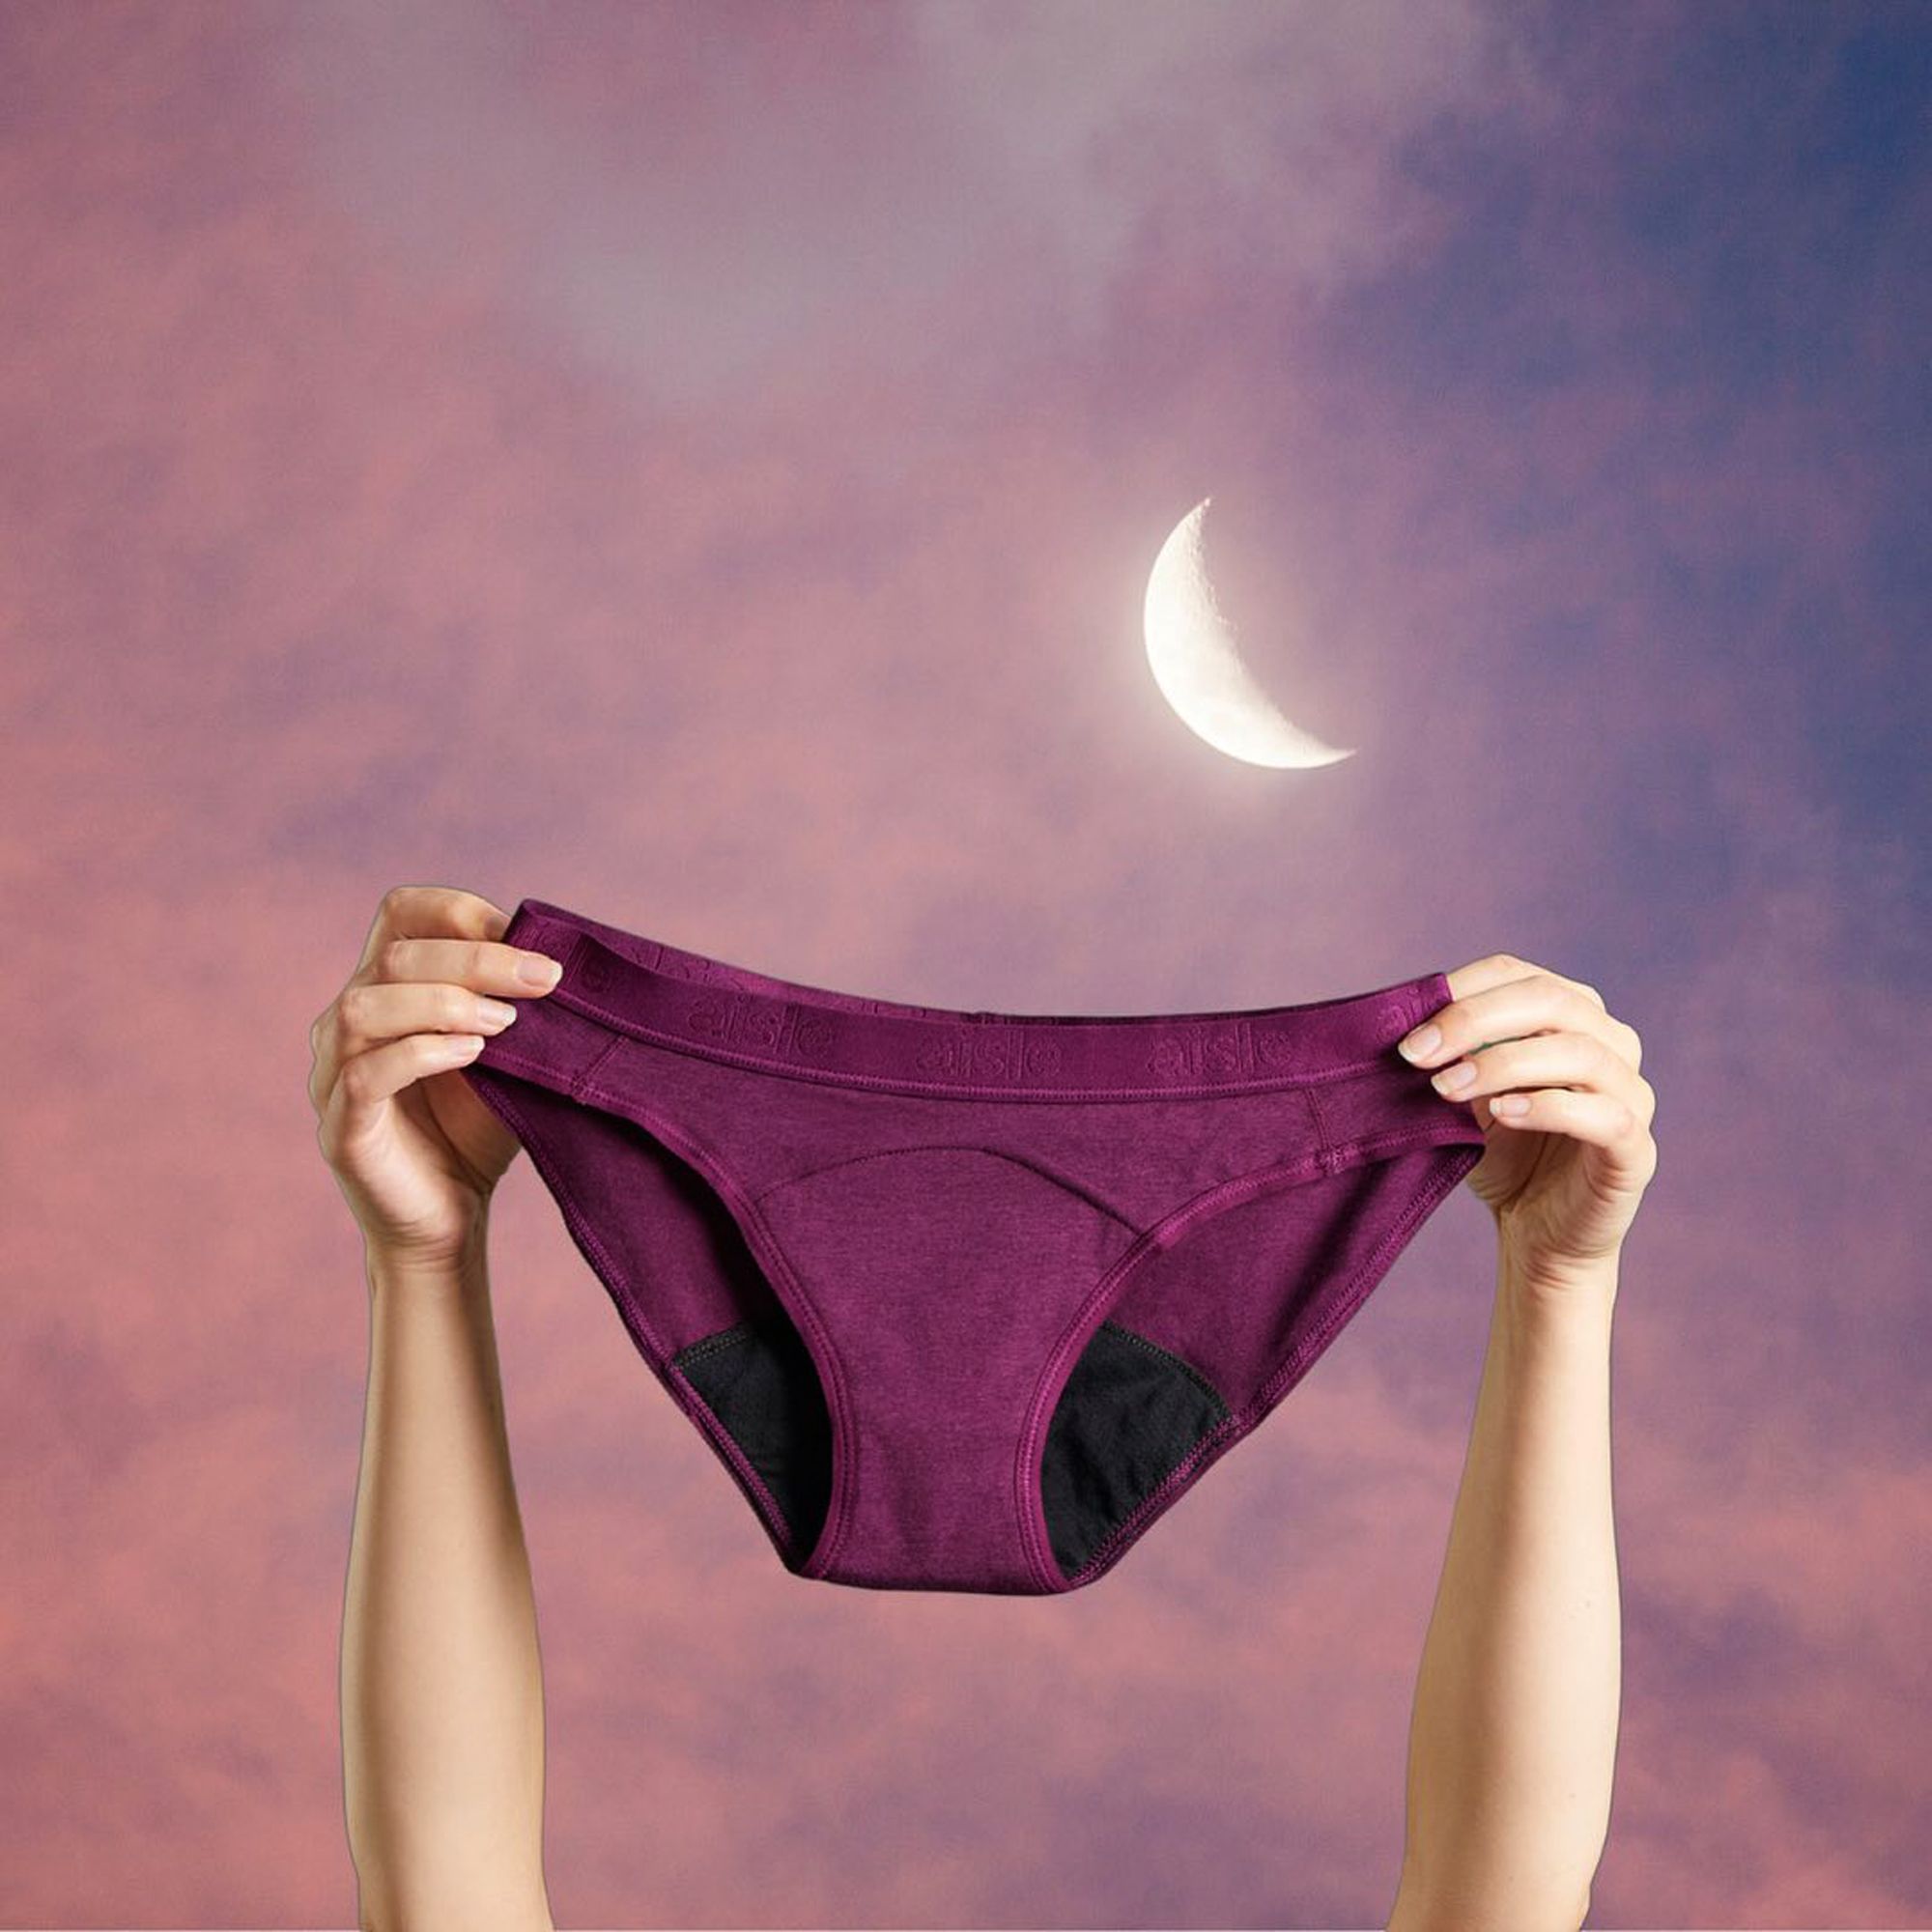 Period Underwear for Women Girls,Leak Proof Period Panties Easy